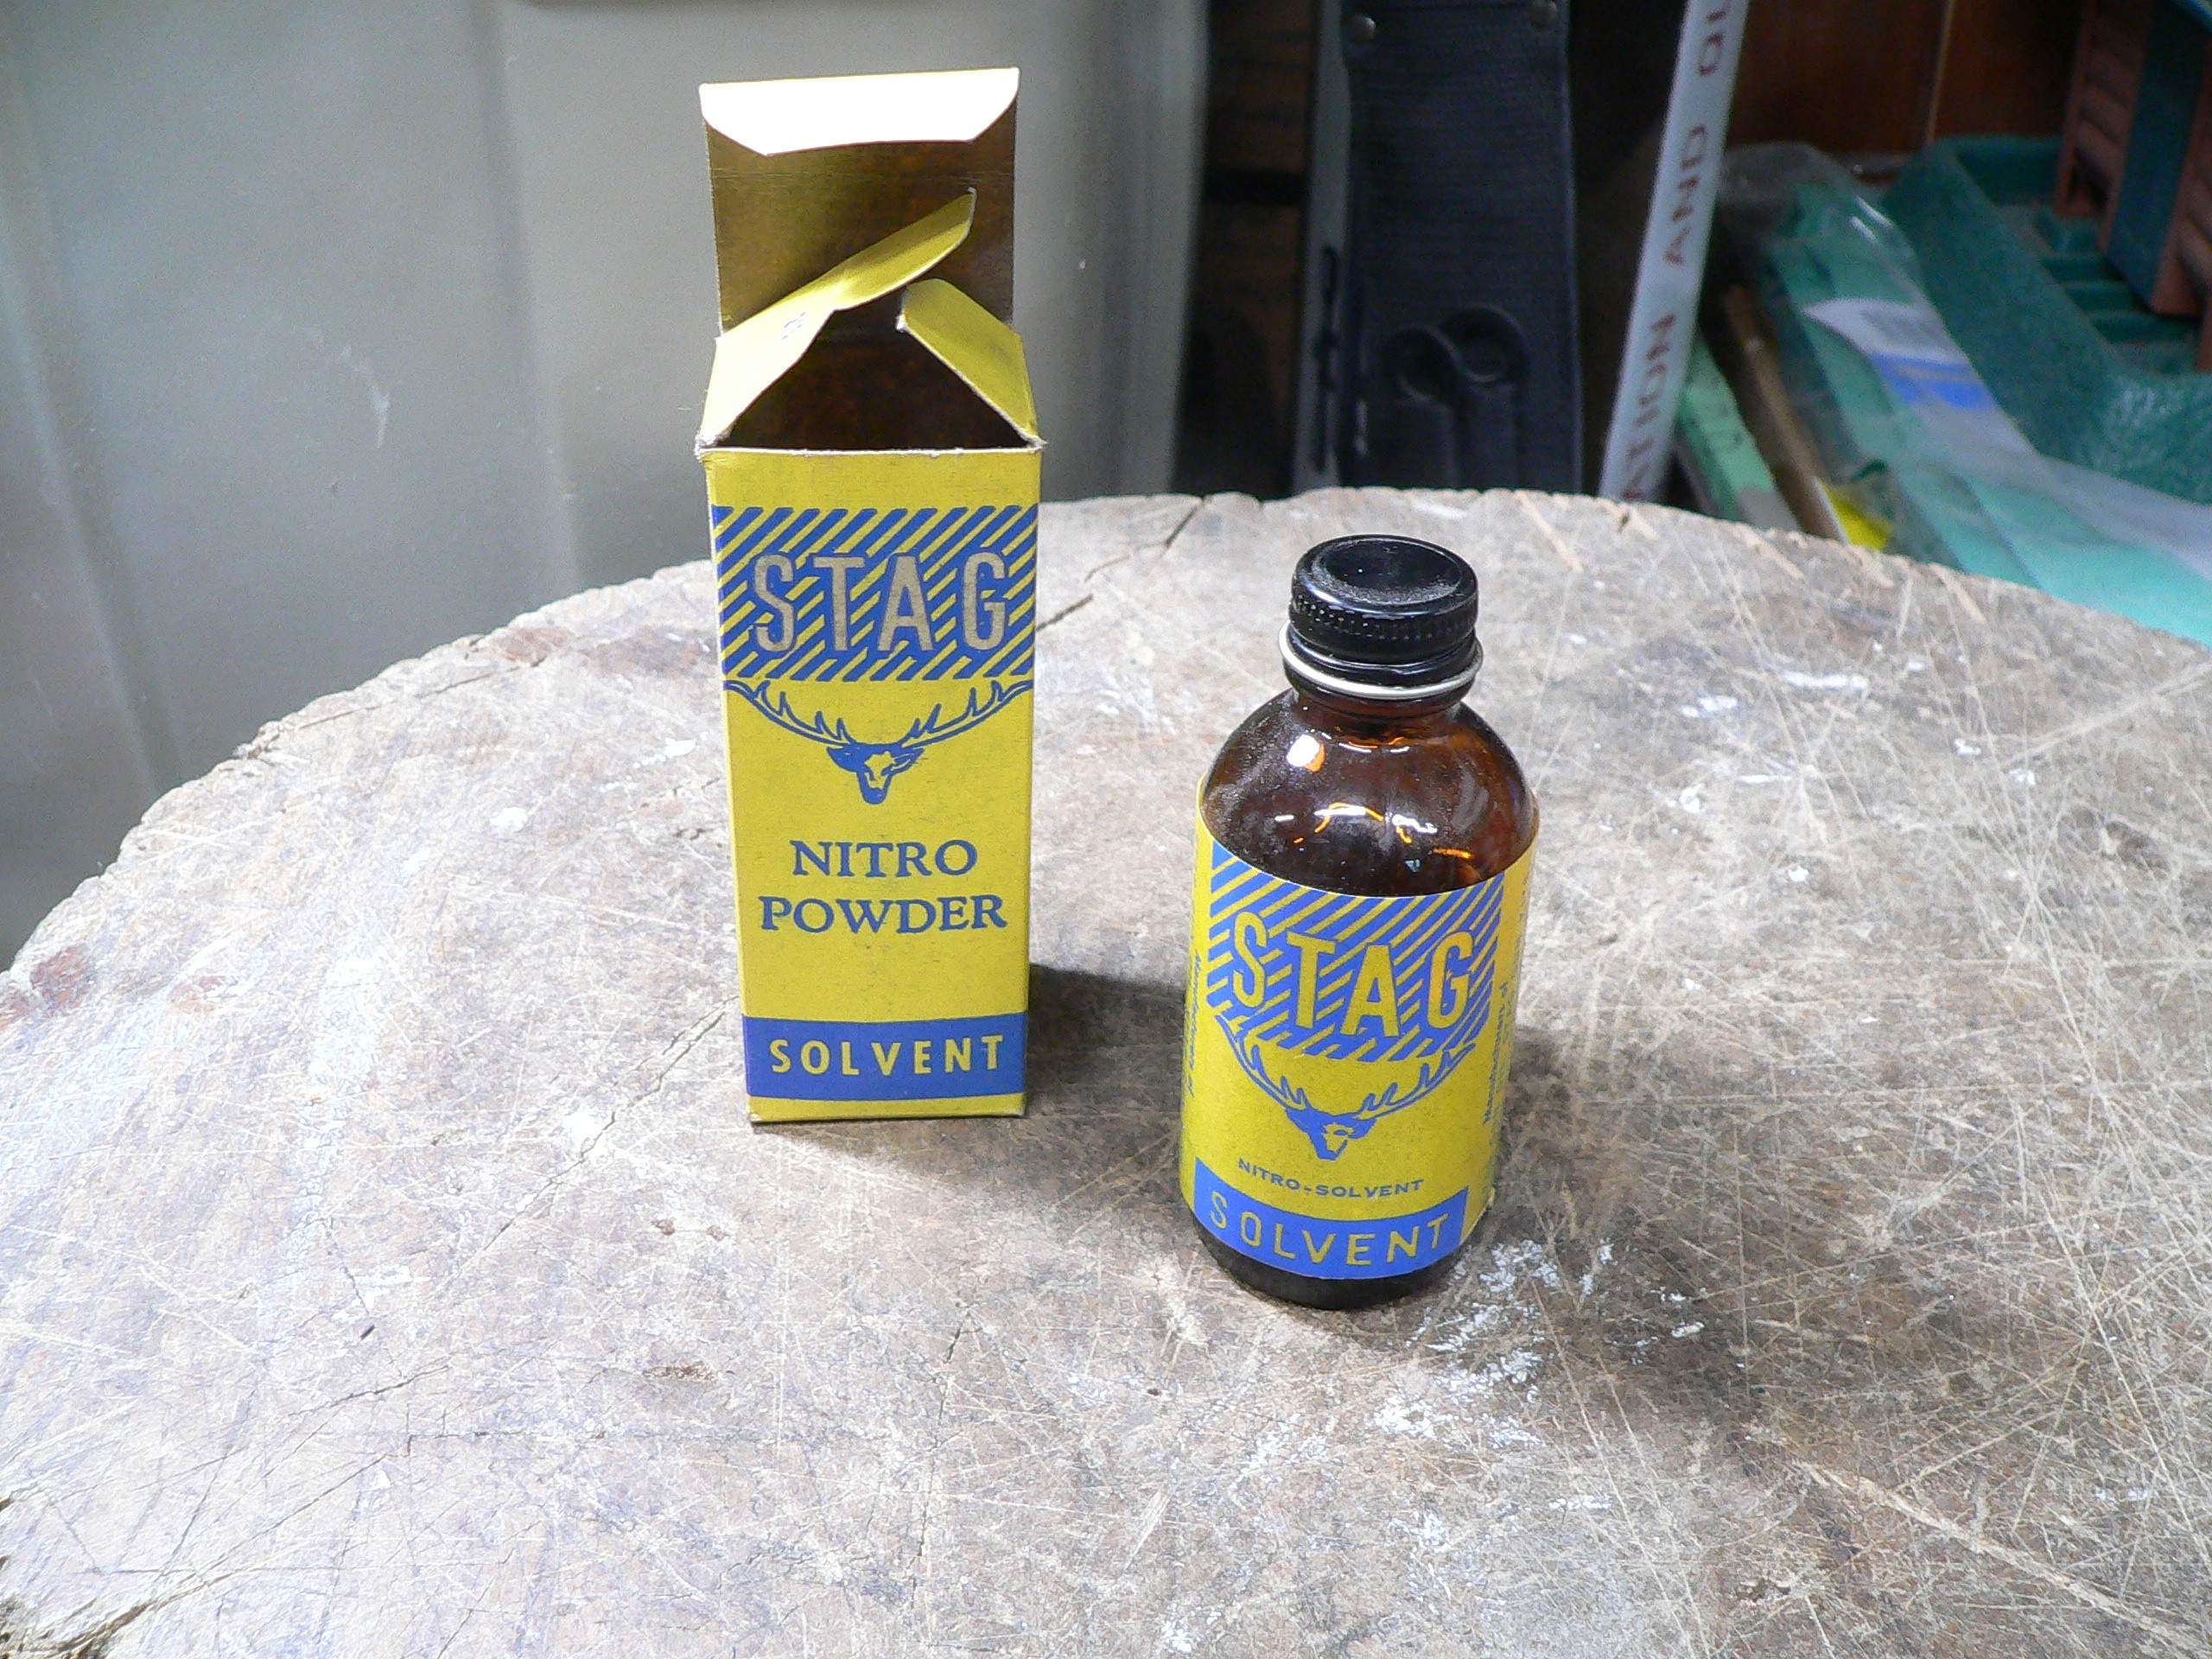 Bouteille antique stag nitro powder solvent # 9896.31